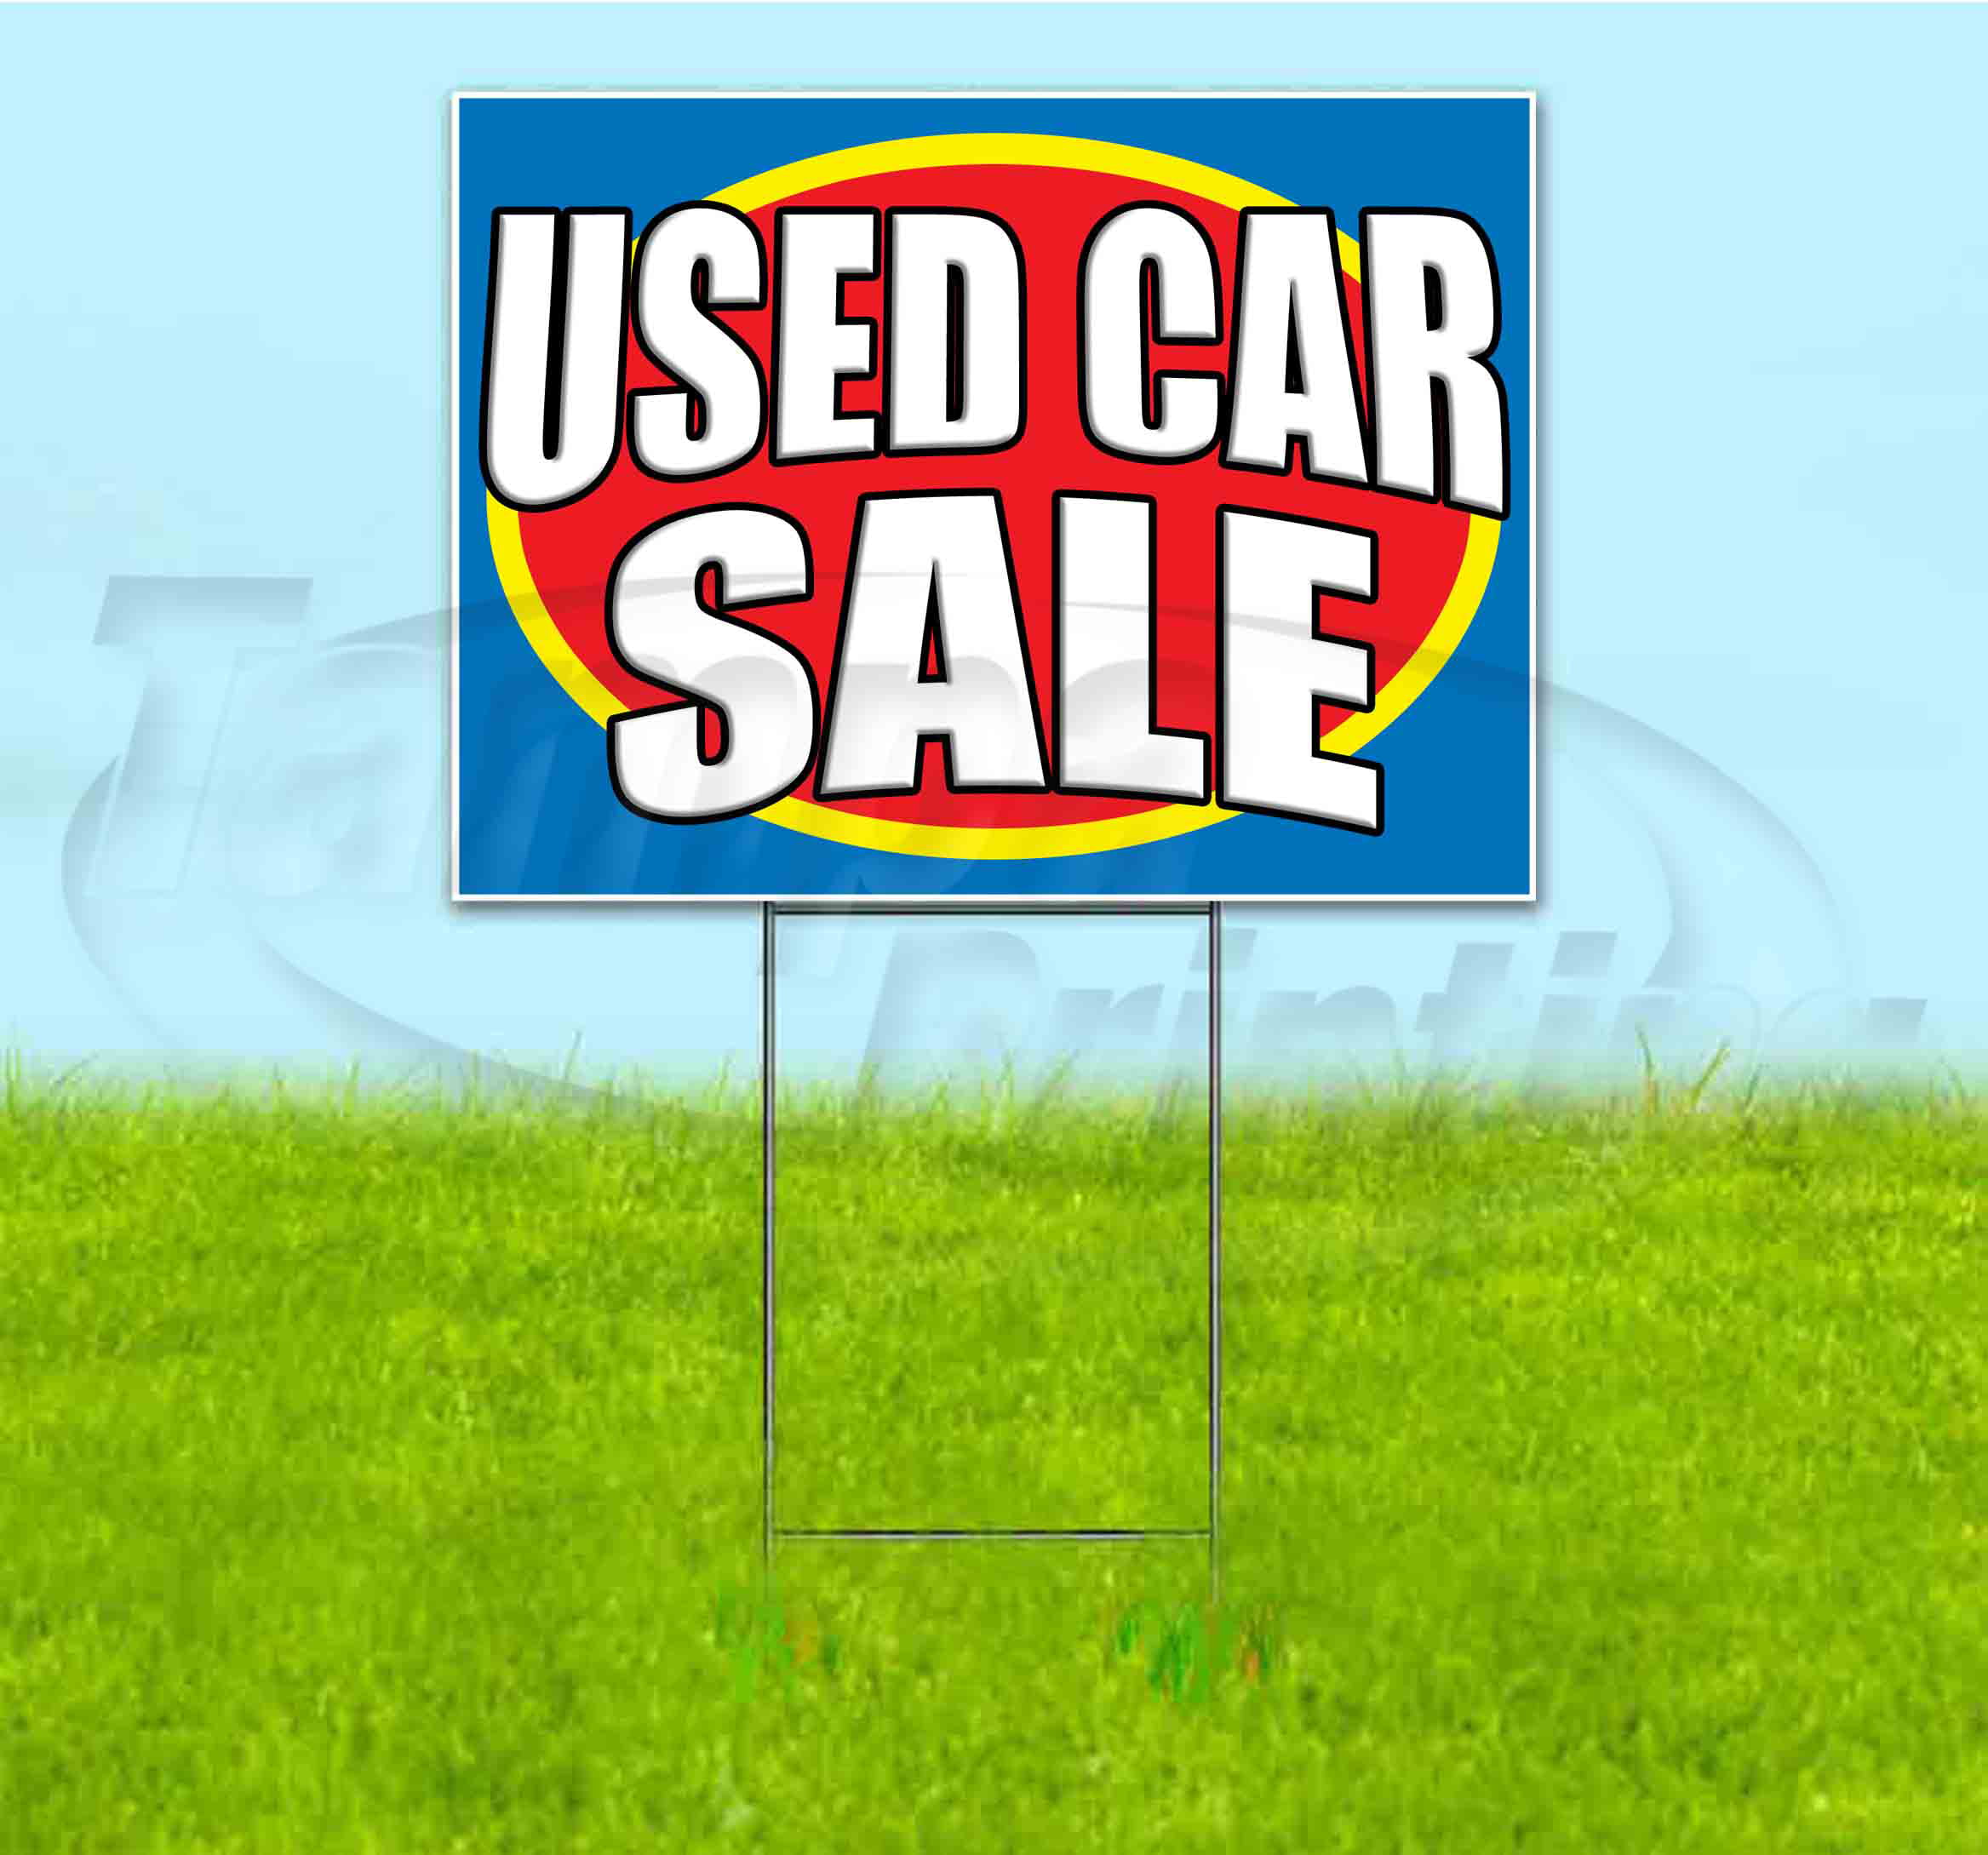 Used Car Sale Retail Auto Dealer Plastic Indoor Outdoor Coroplast Yard Sign 